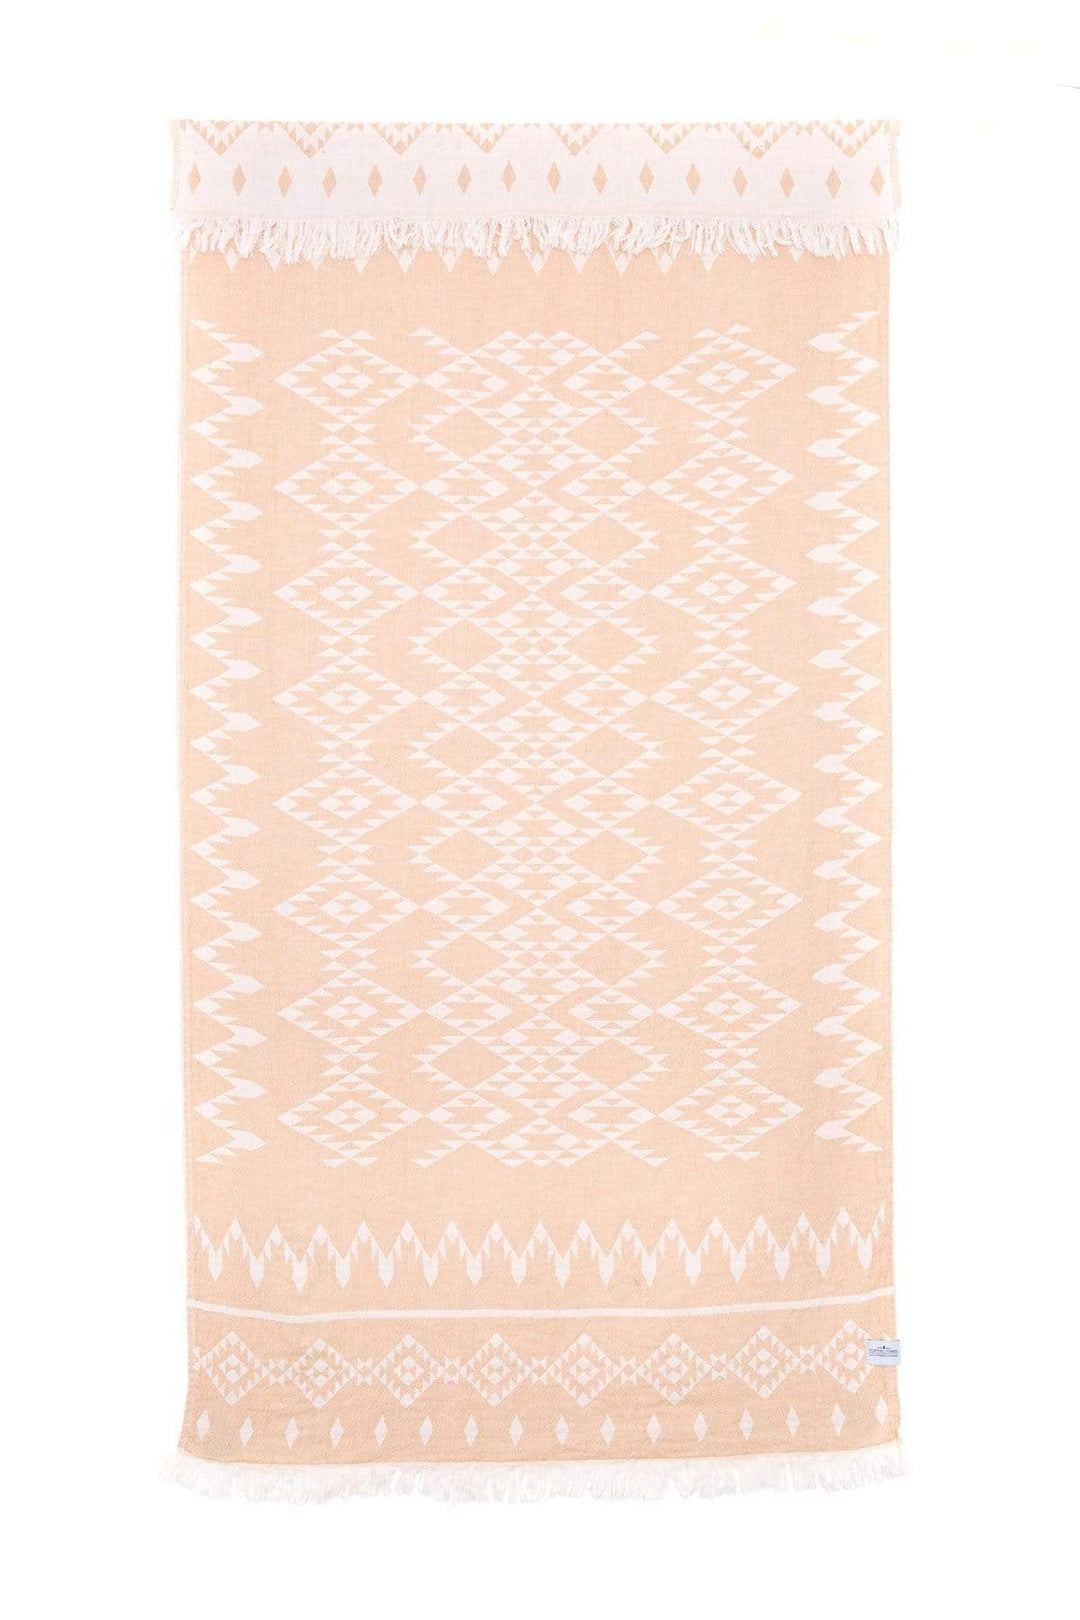 Tofino Towels Towel Mustard Tofino Towels | THE COASTAL TOWEL SERIES